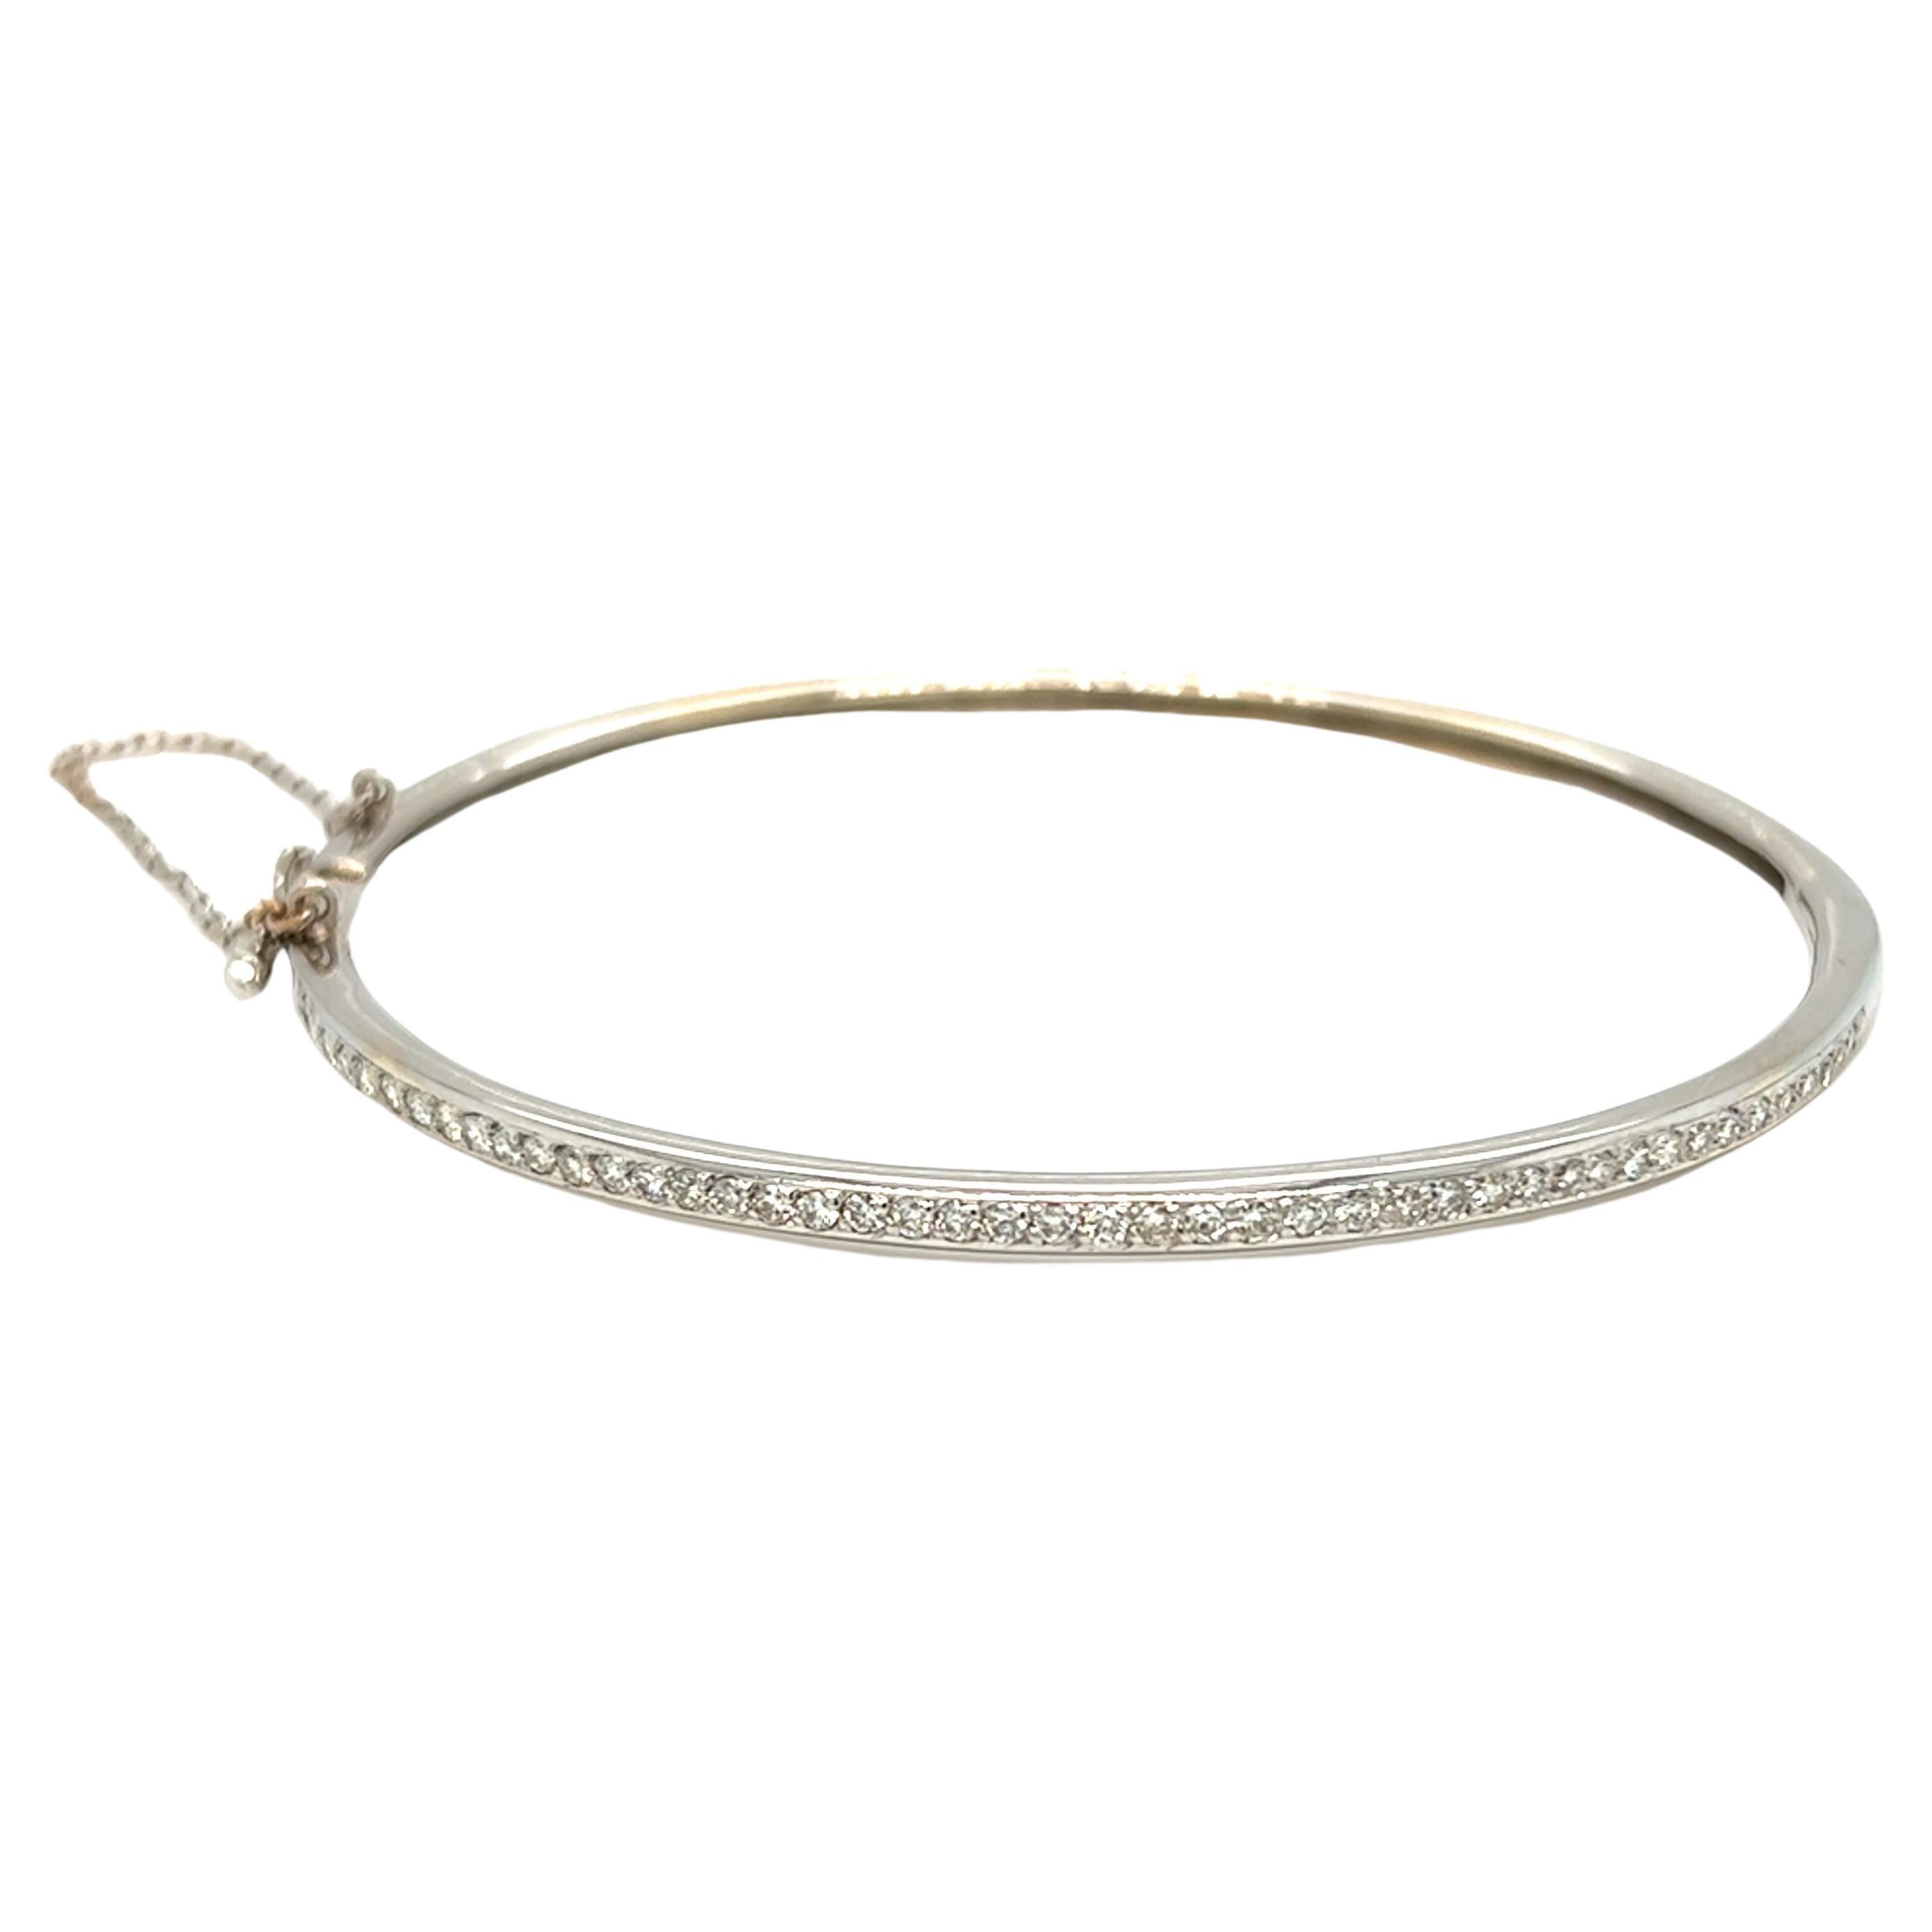 Diamond Bracelet Bangle with Security Chain 14k White Gold